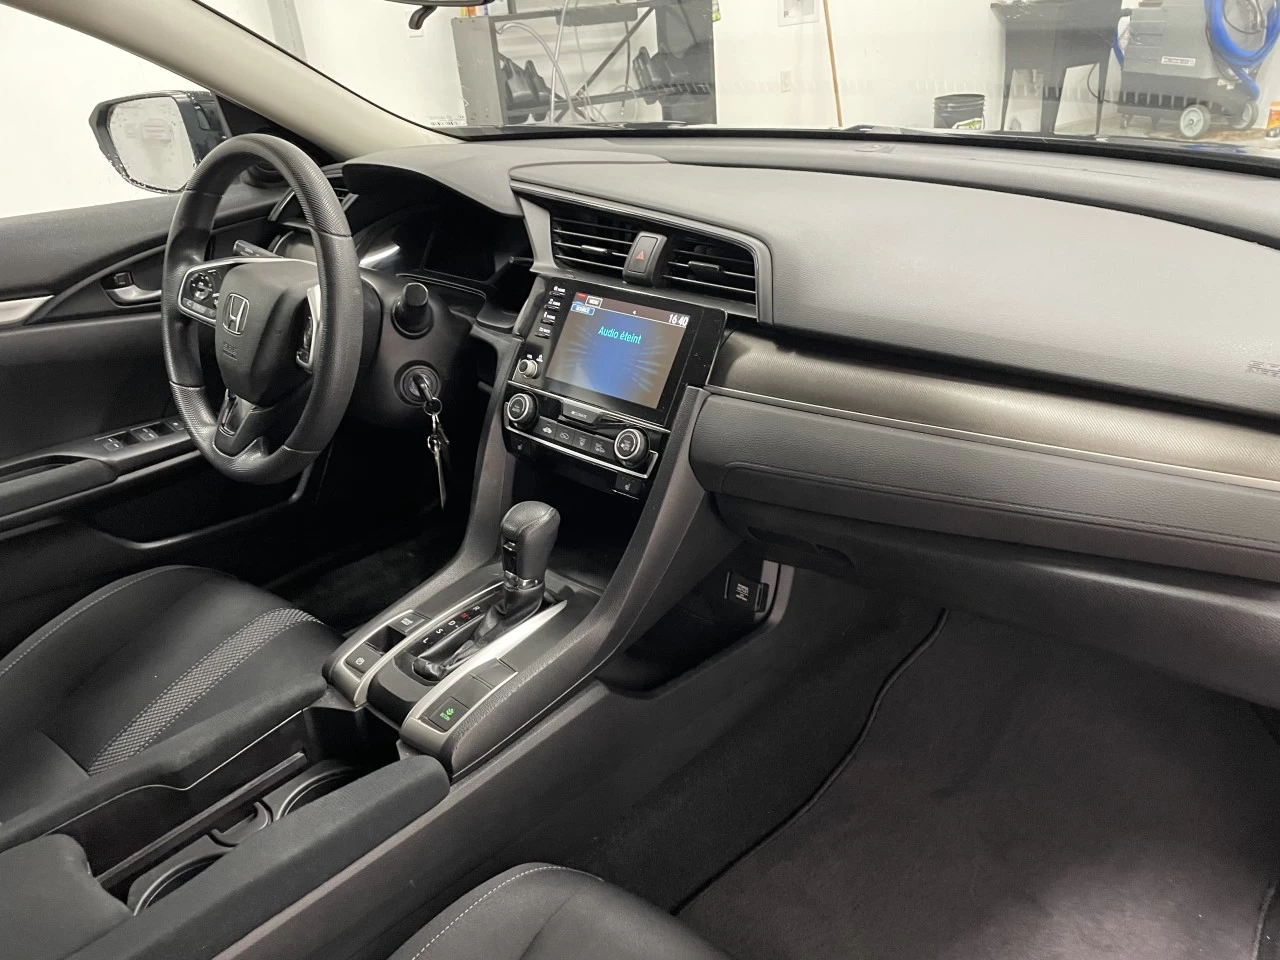 2019 Honda Civic Berline LX Image principale